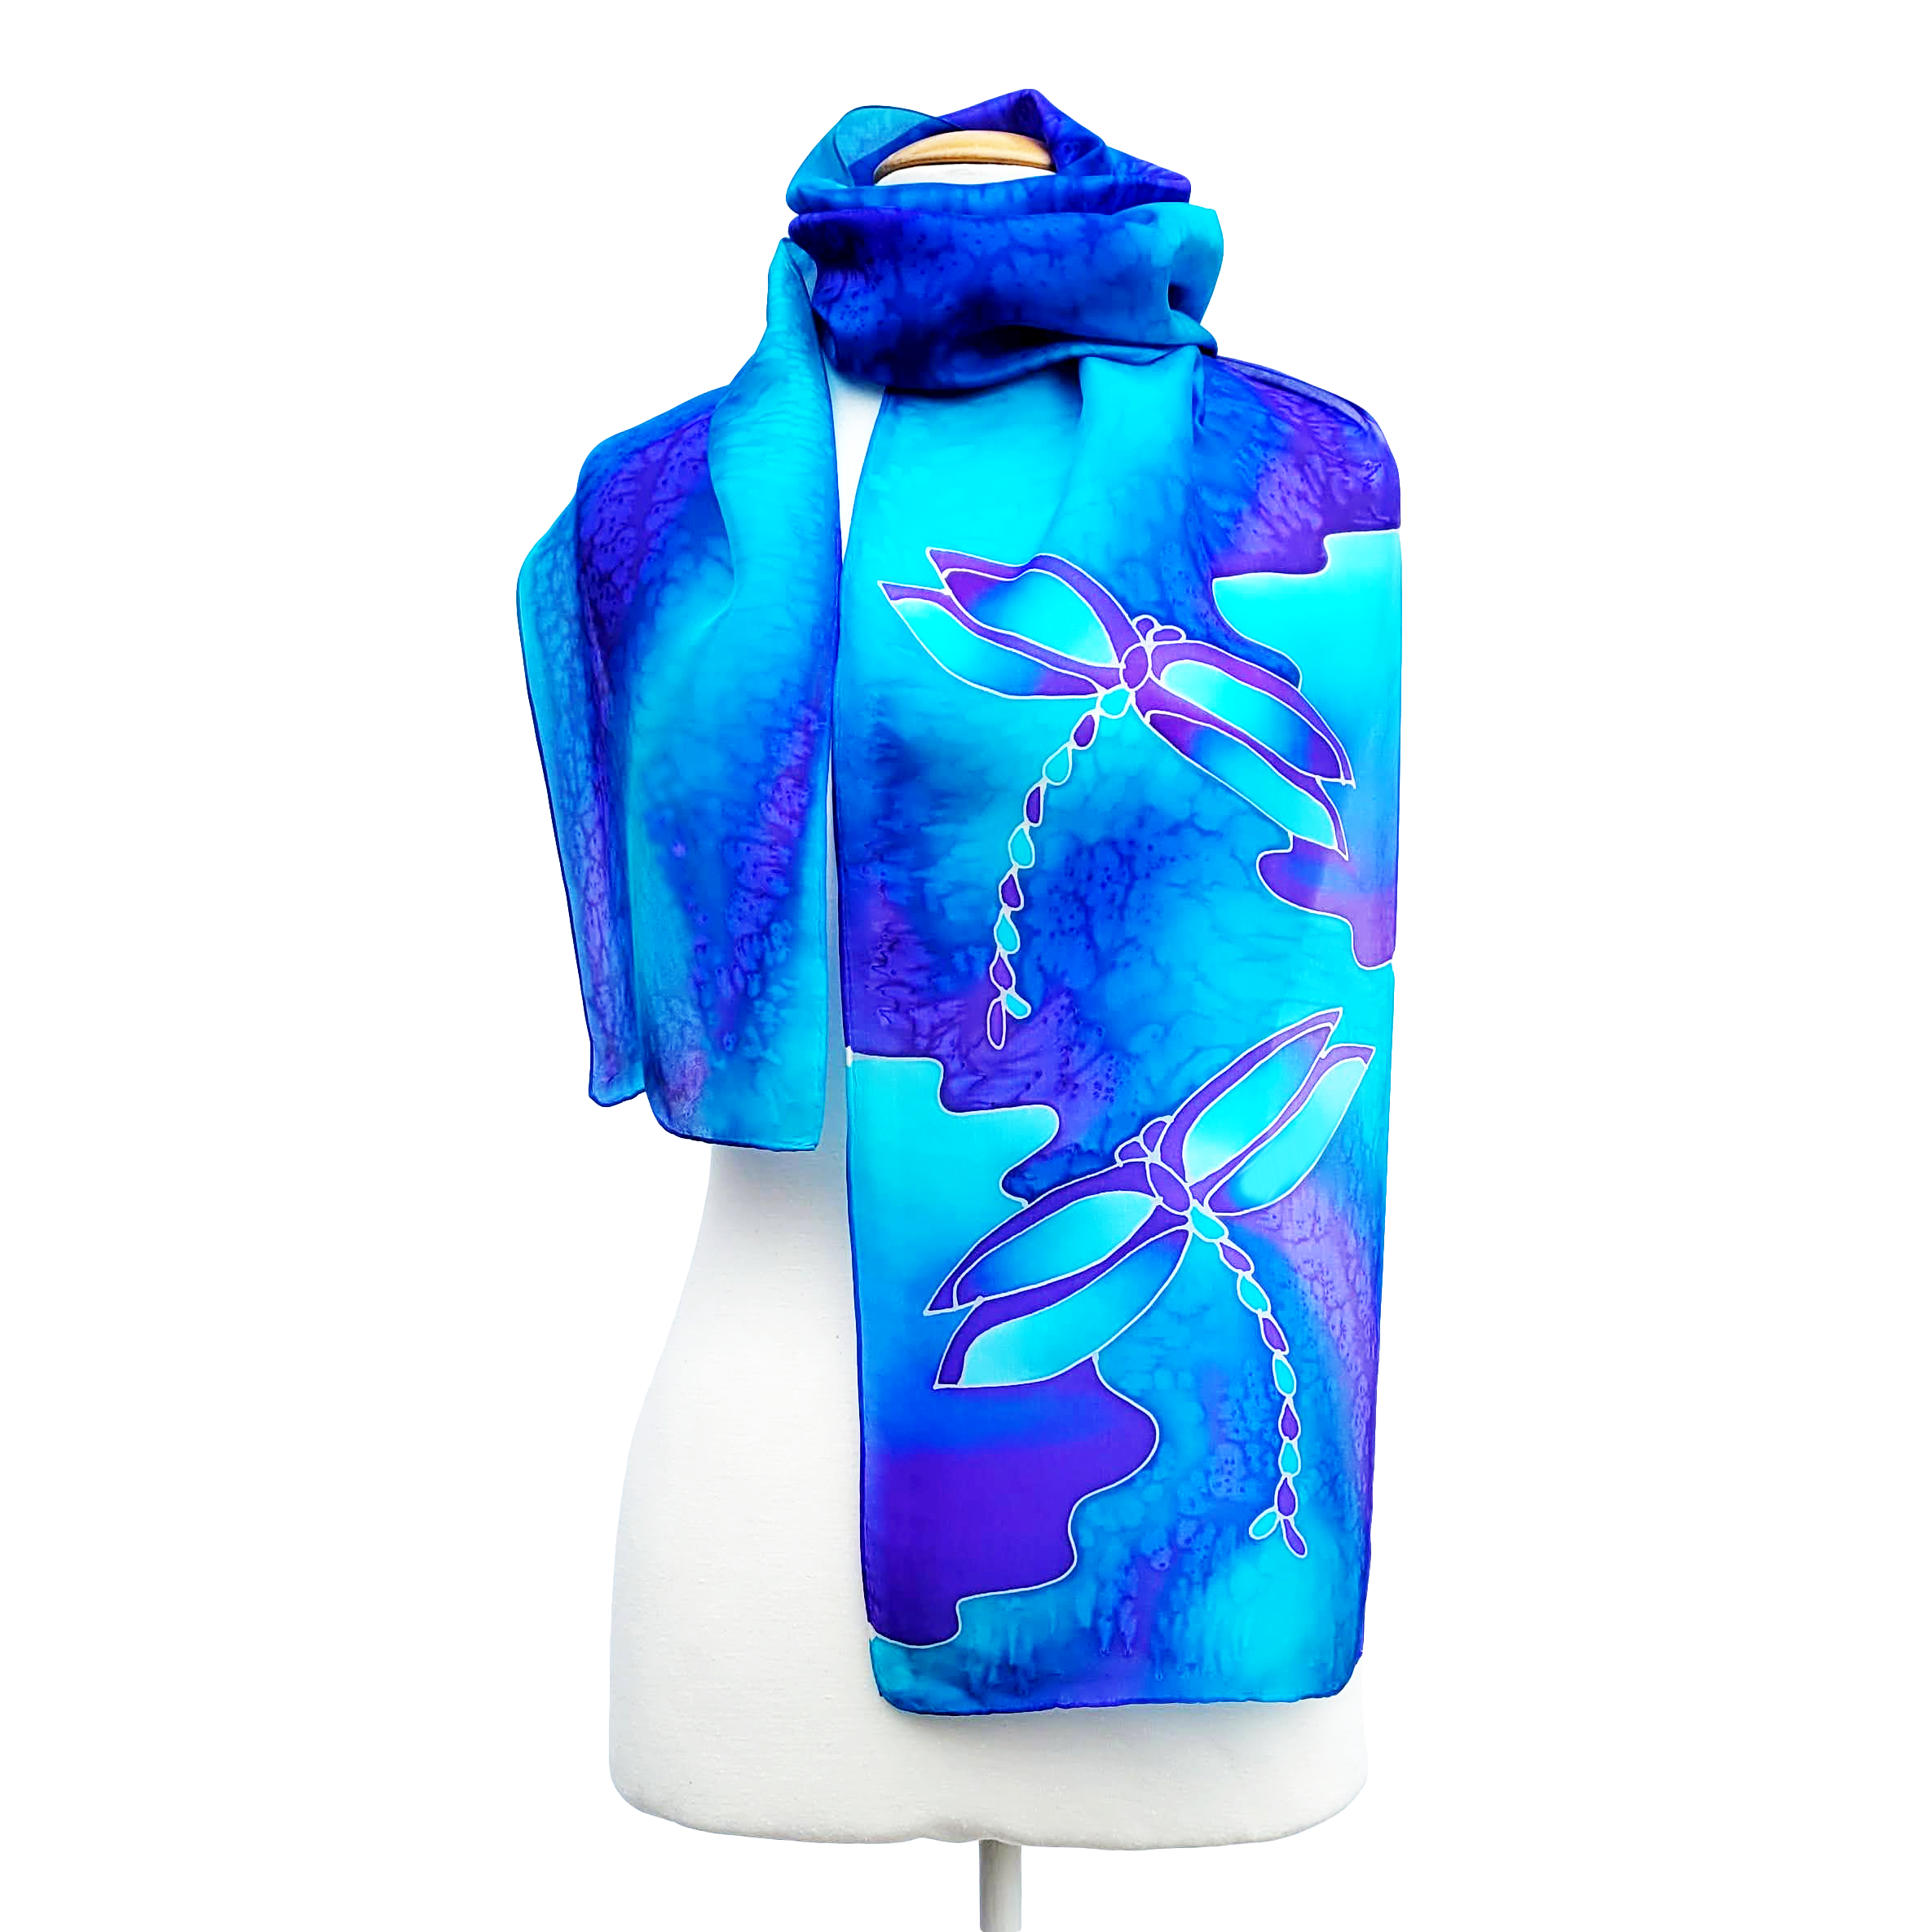 Dragonfly silk scarf hand painted blue purple color handmade by Lynne Kiel